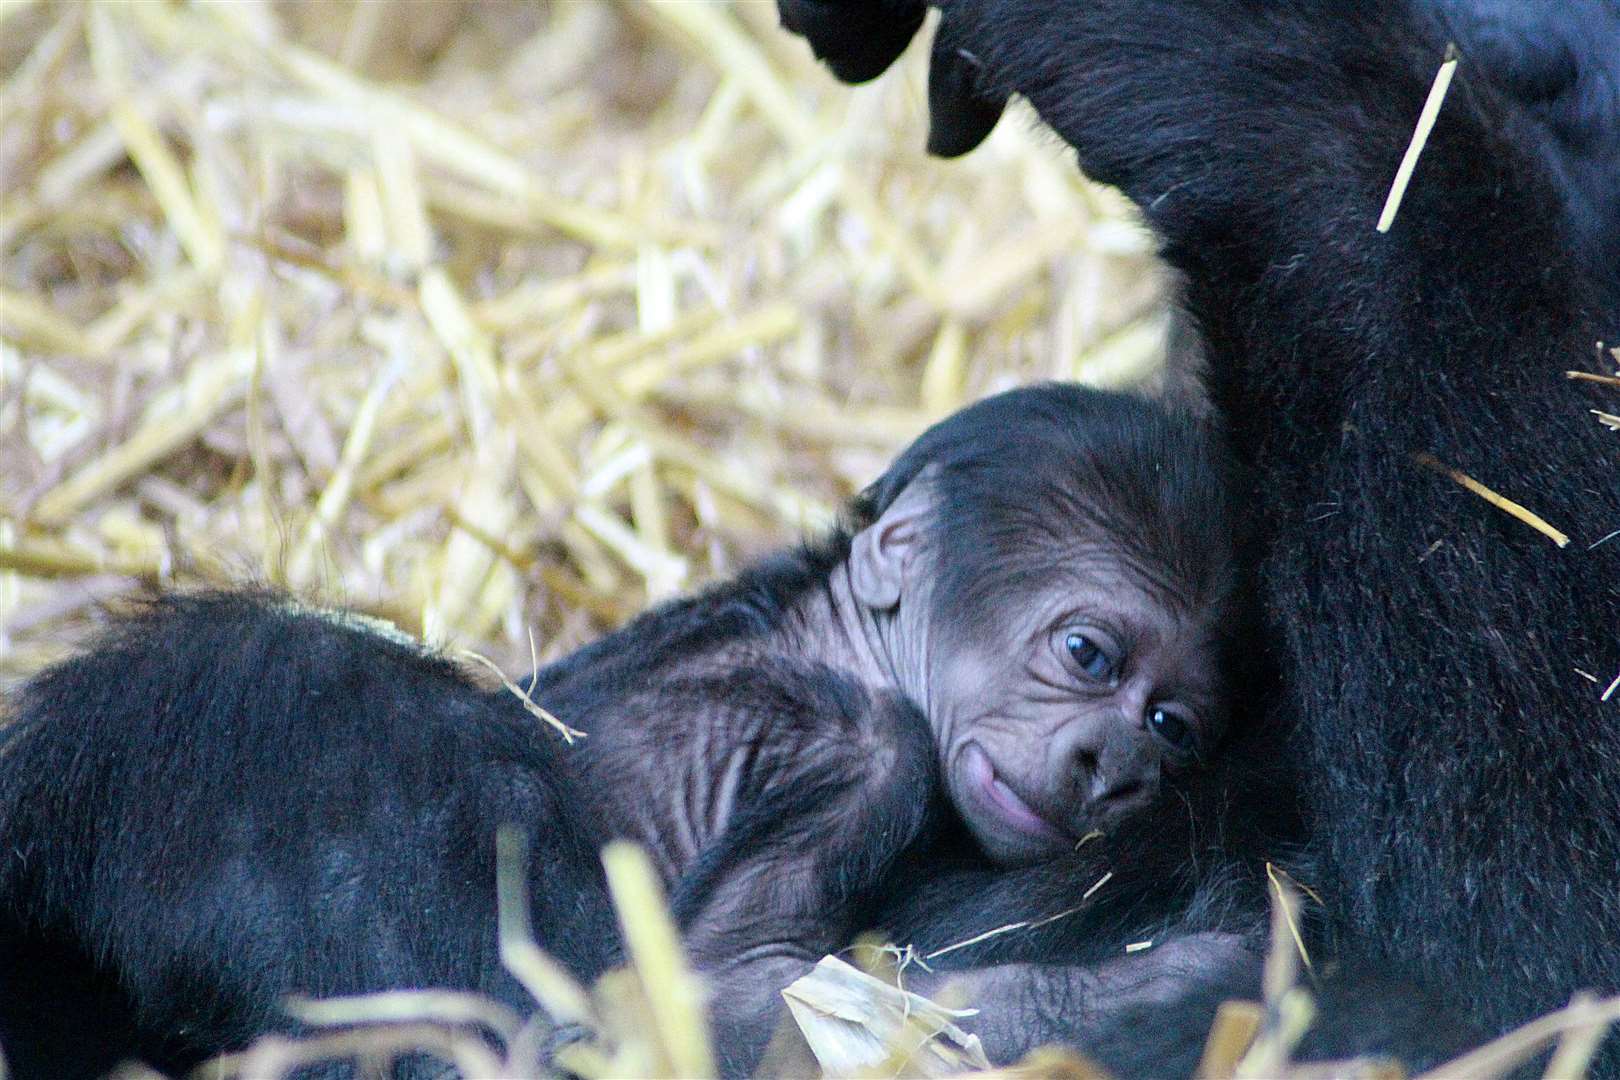 A baby gorilla born at Port Lympne. Picture: Leanne Smith